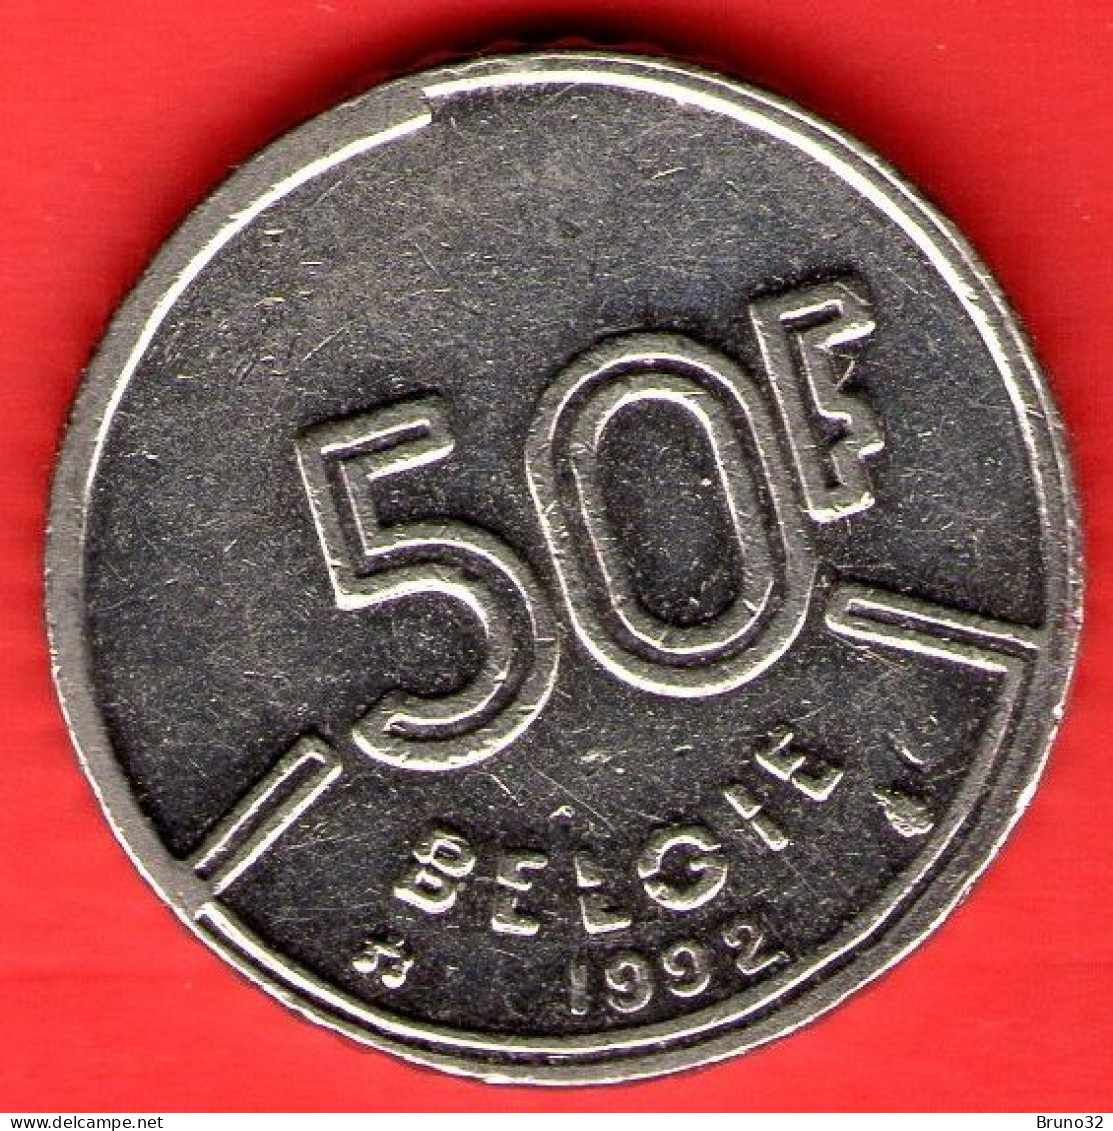 Belgio - Belgium - Belgique - Belgie - 1992 - 50 Franchi - QFDC/aUNC - Come Da Foto - 50 Francs